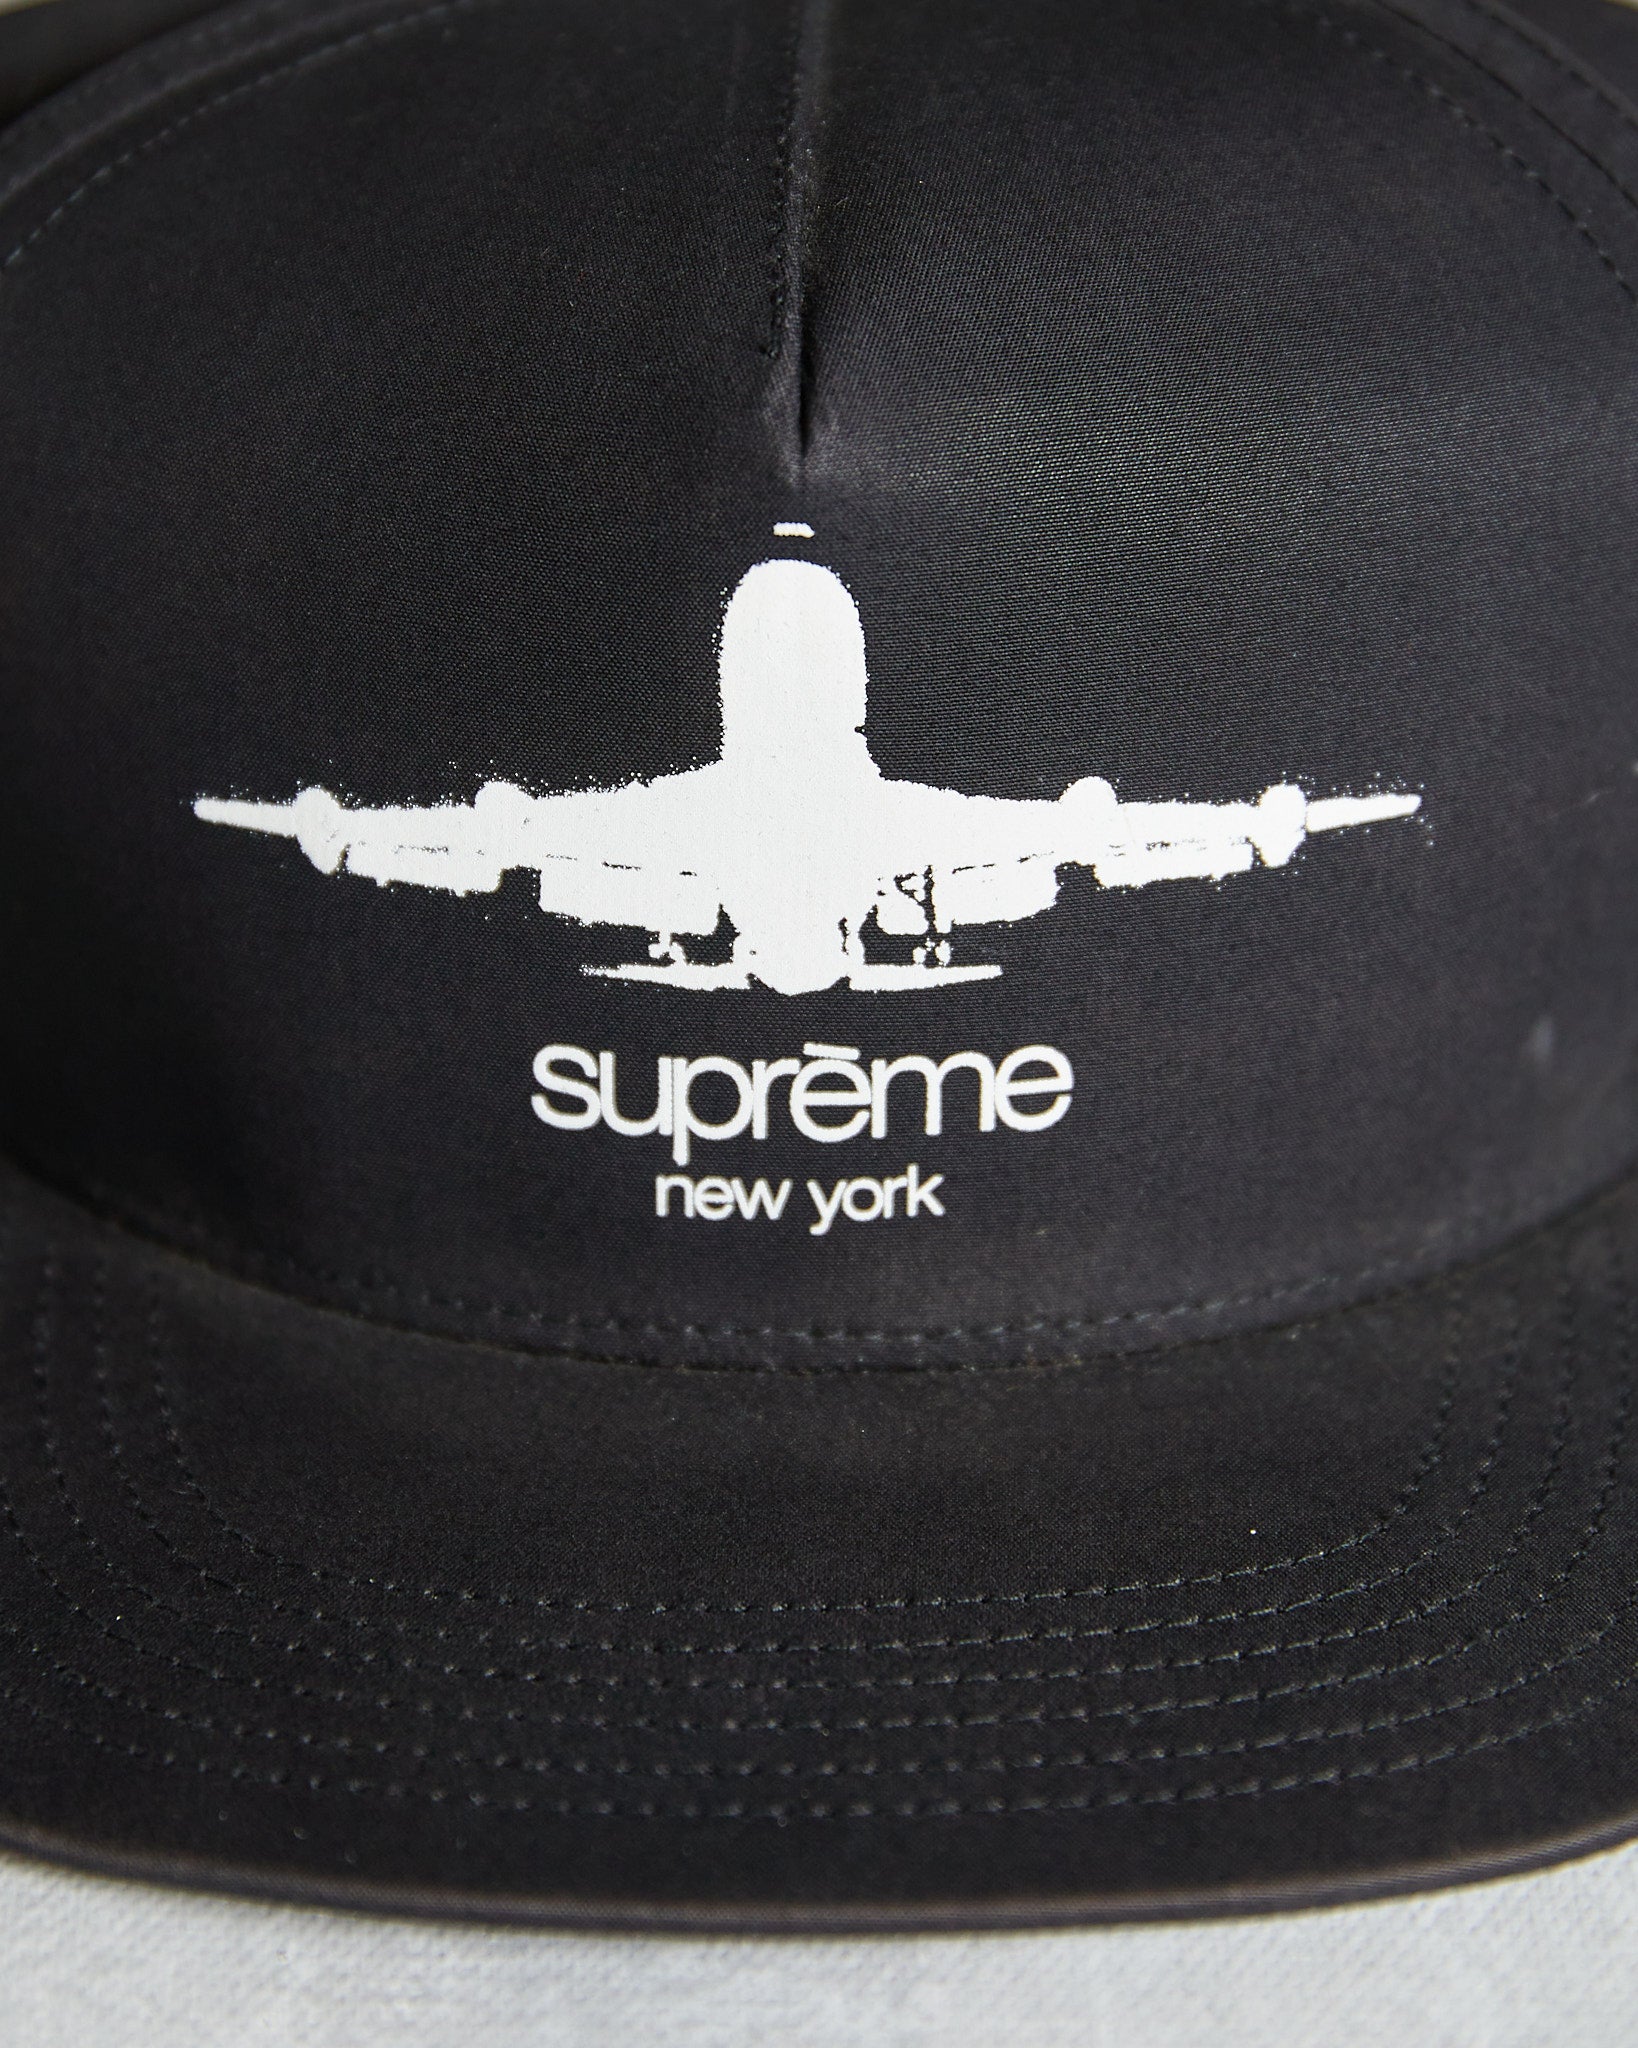 Supreme Plane Hat black